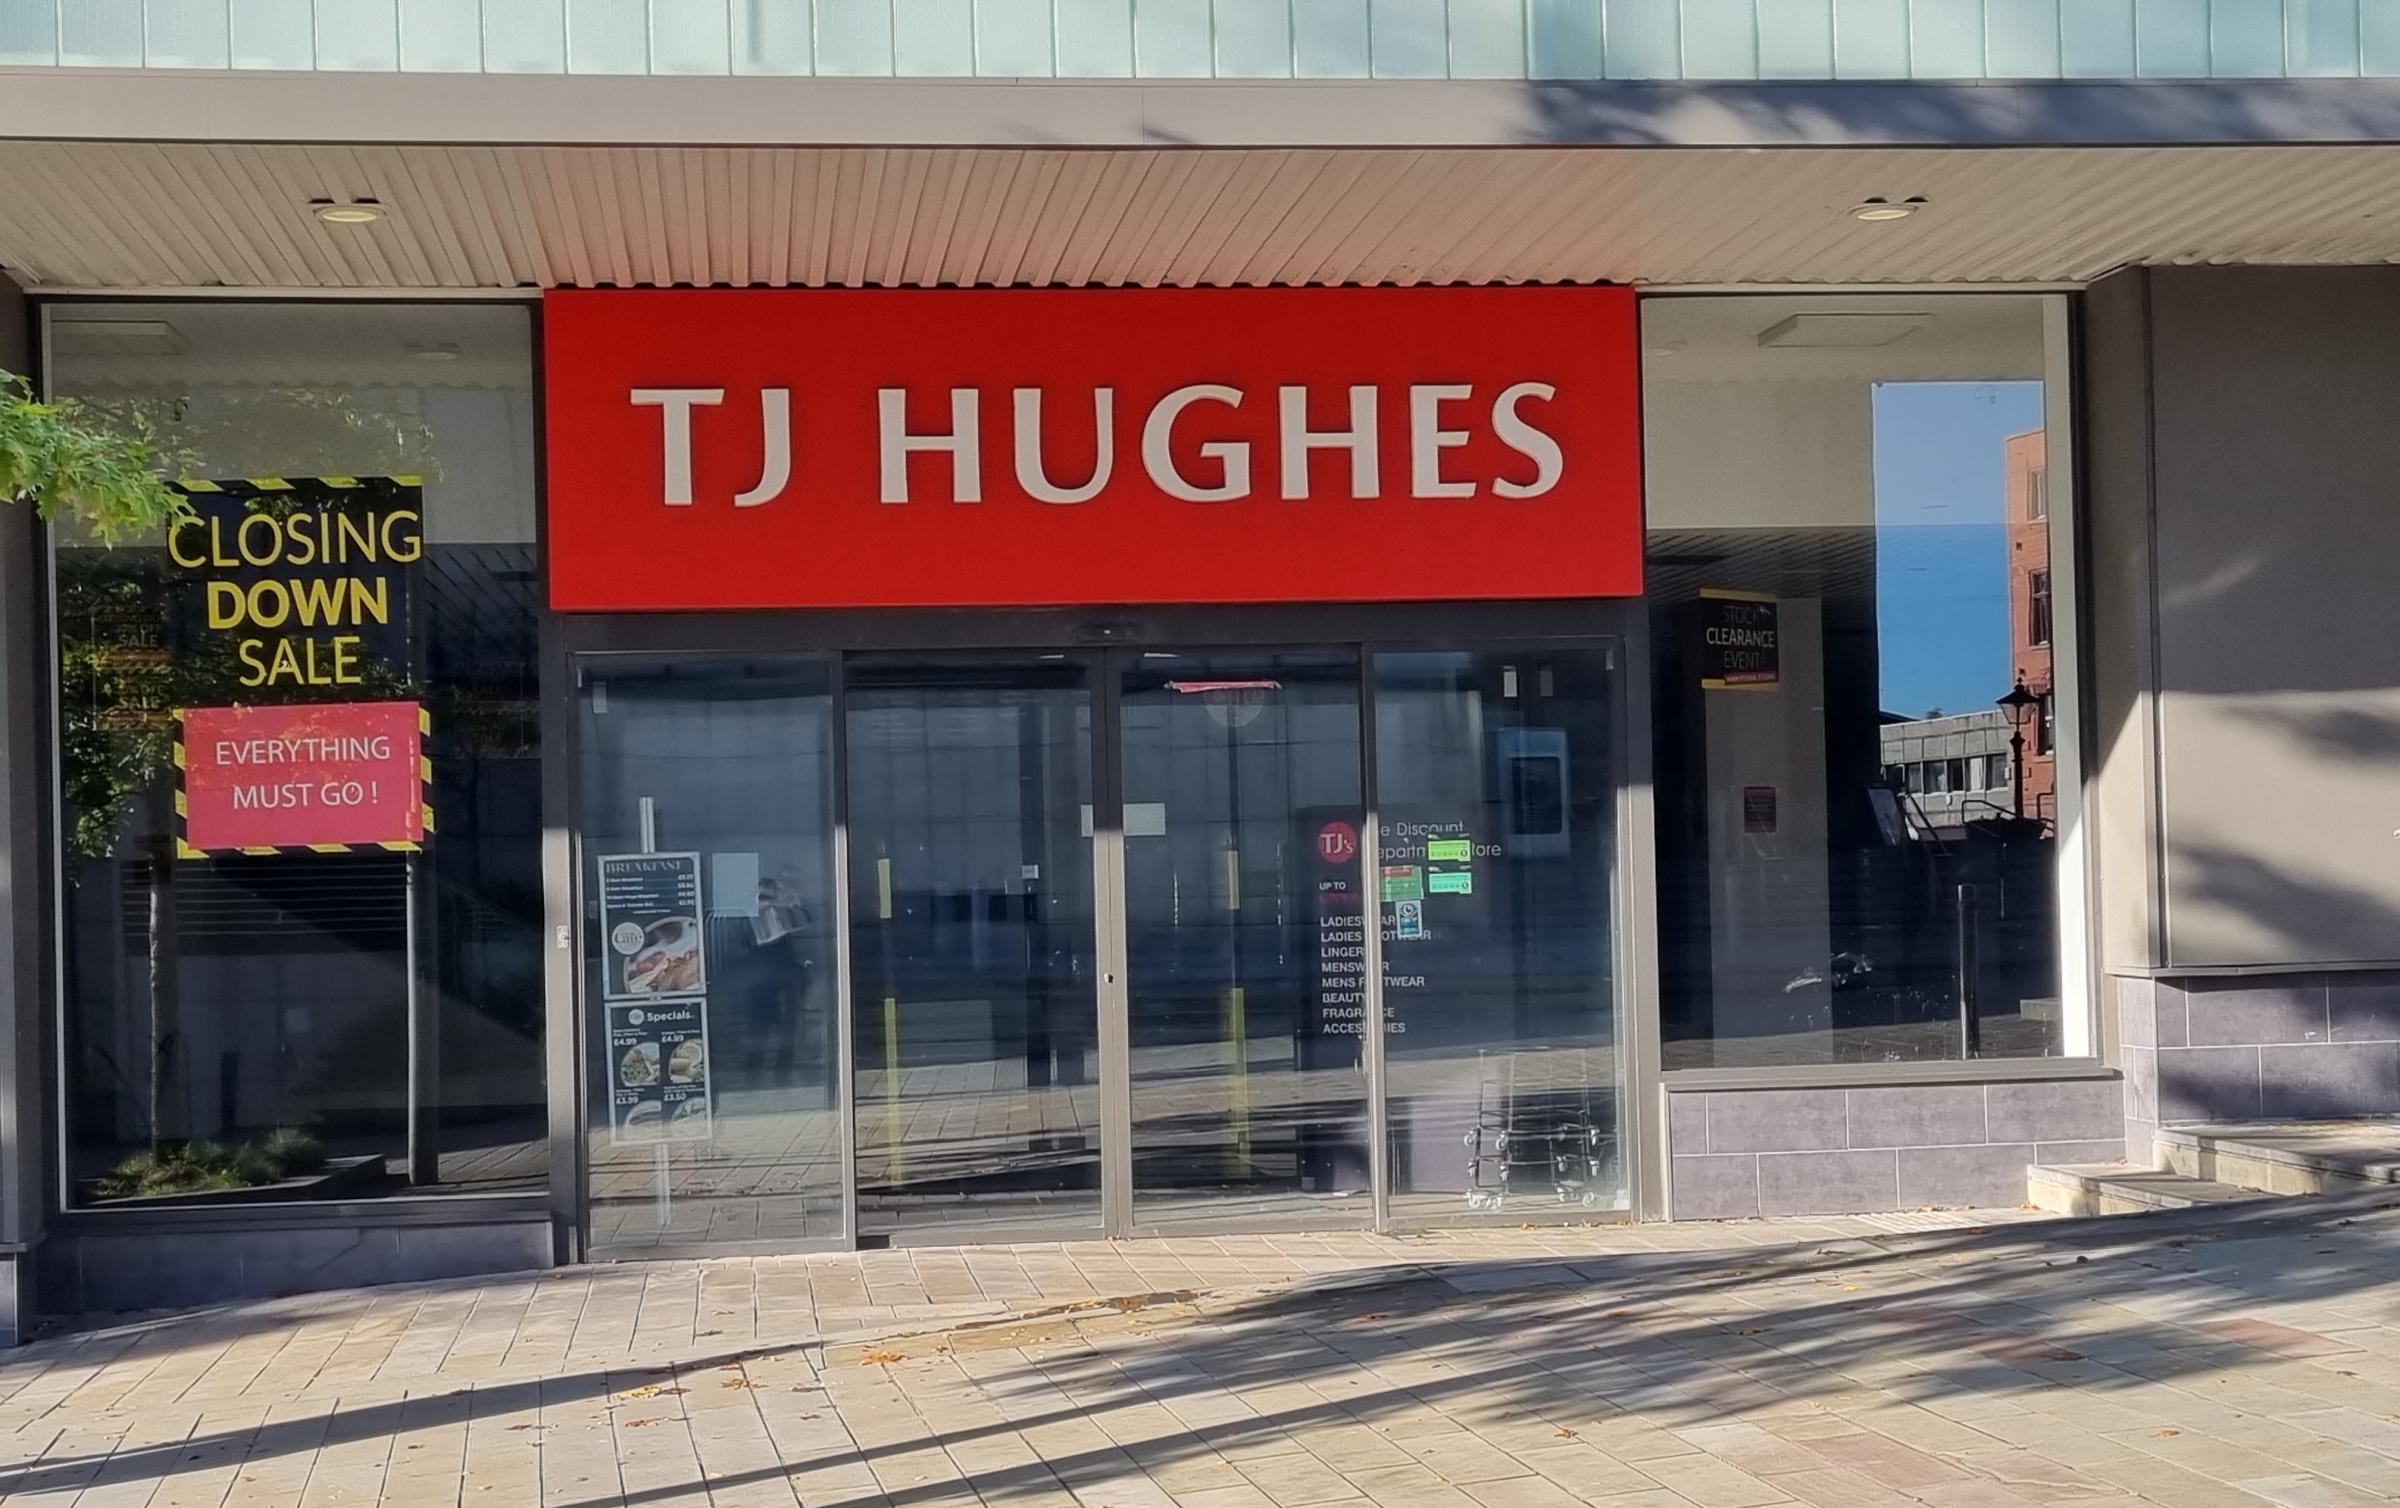 The TJ Hughes store